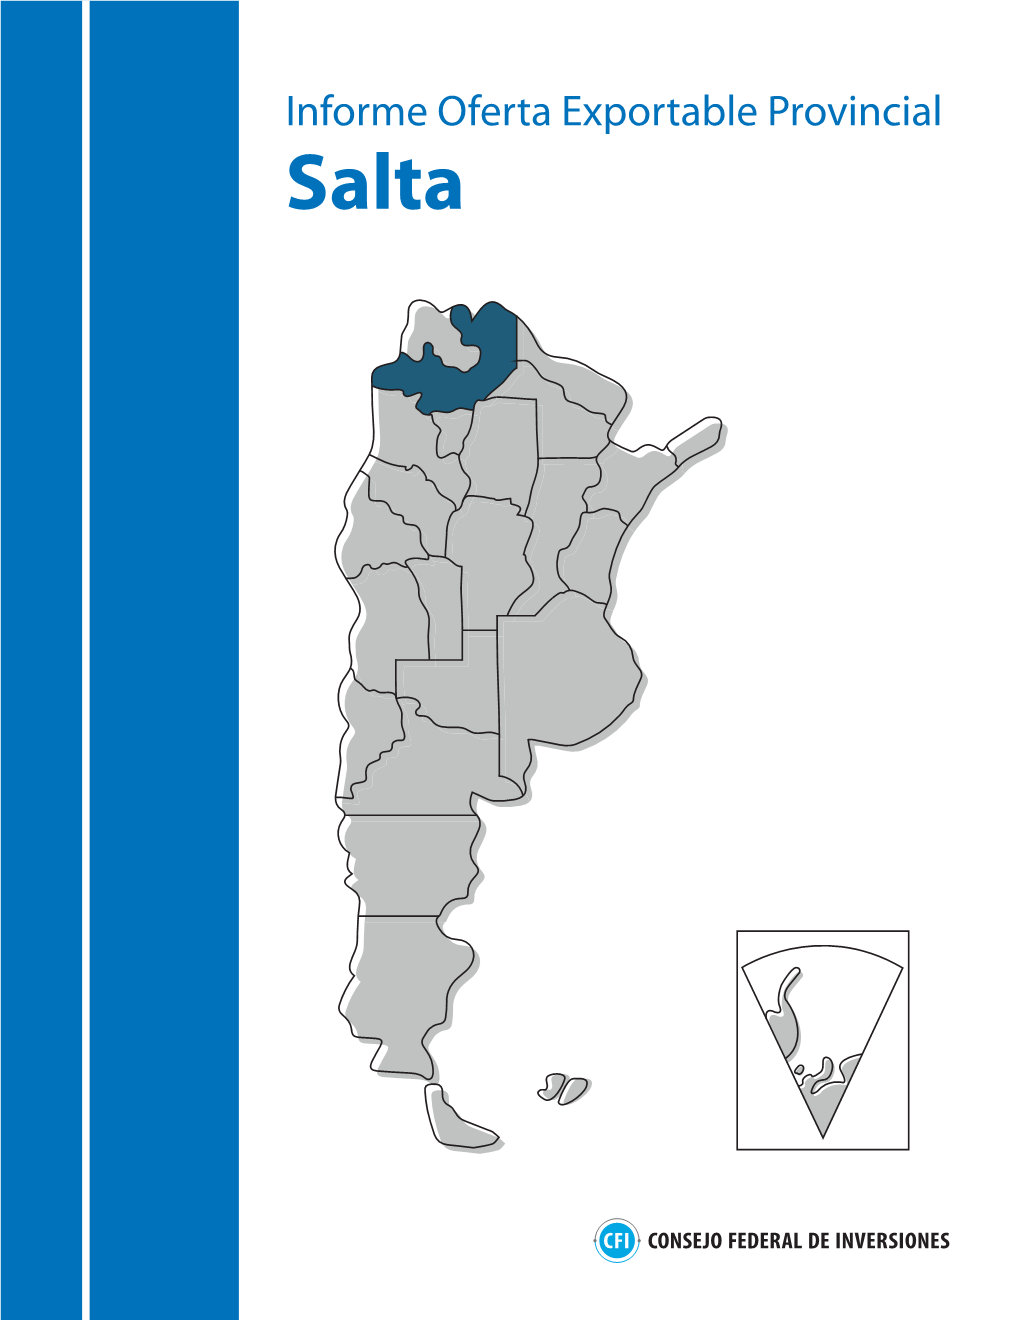 Informe Oferta Exportable Provincial Salta Informe Oferta Exportable Provincial – IOEP – SALTA